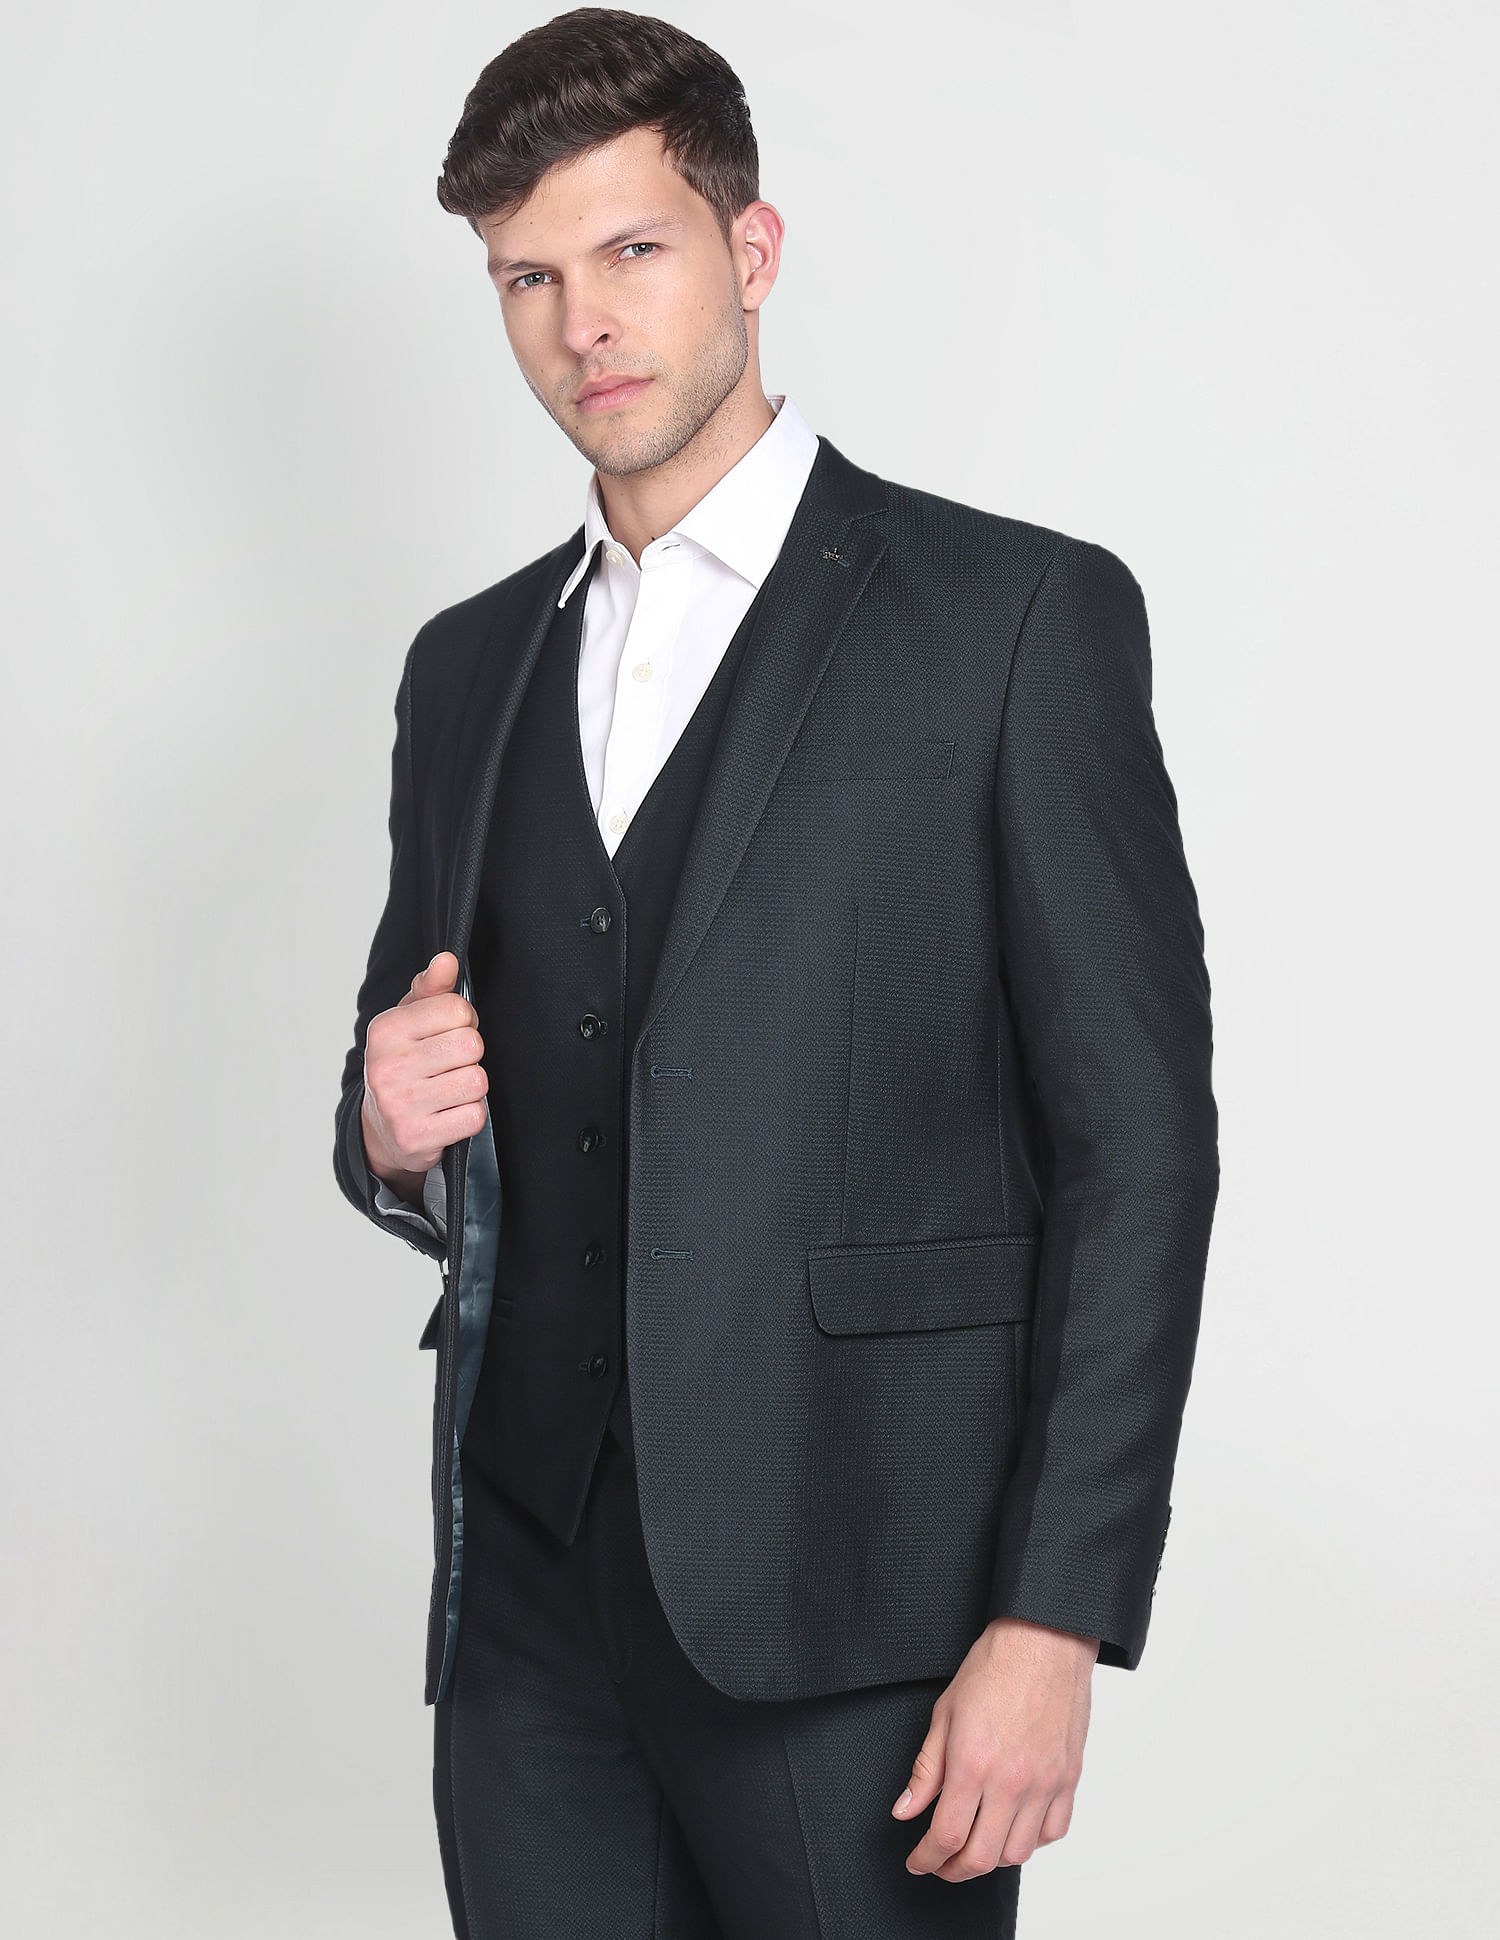 Men Waistcoat Styles-18 Ways to Wear Waistcoat for Classy Look | Diseños de  chalecos, Trajes de para boda masculinos, Trajes de boda hombres